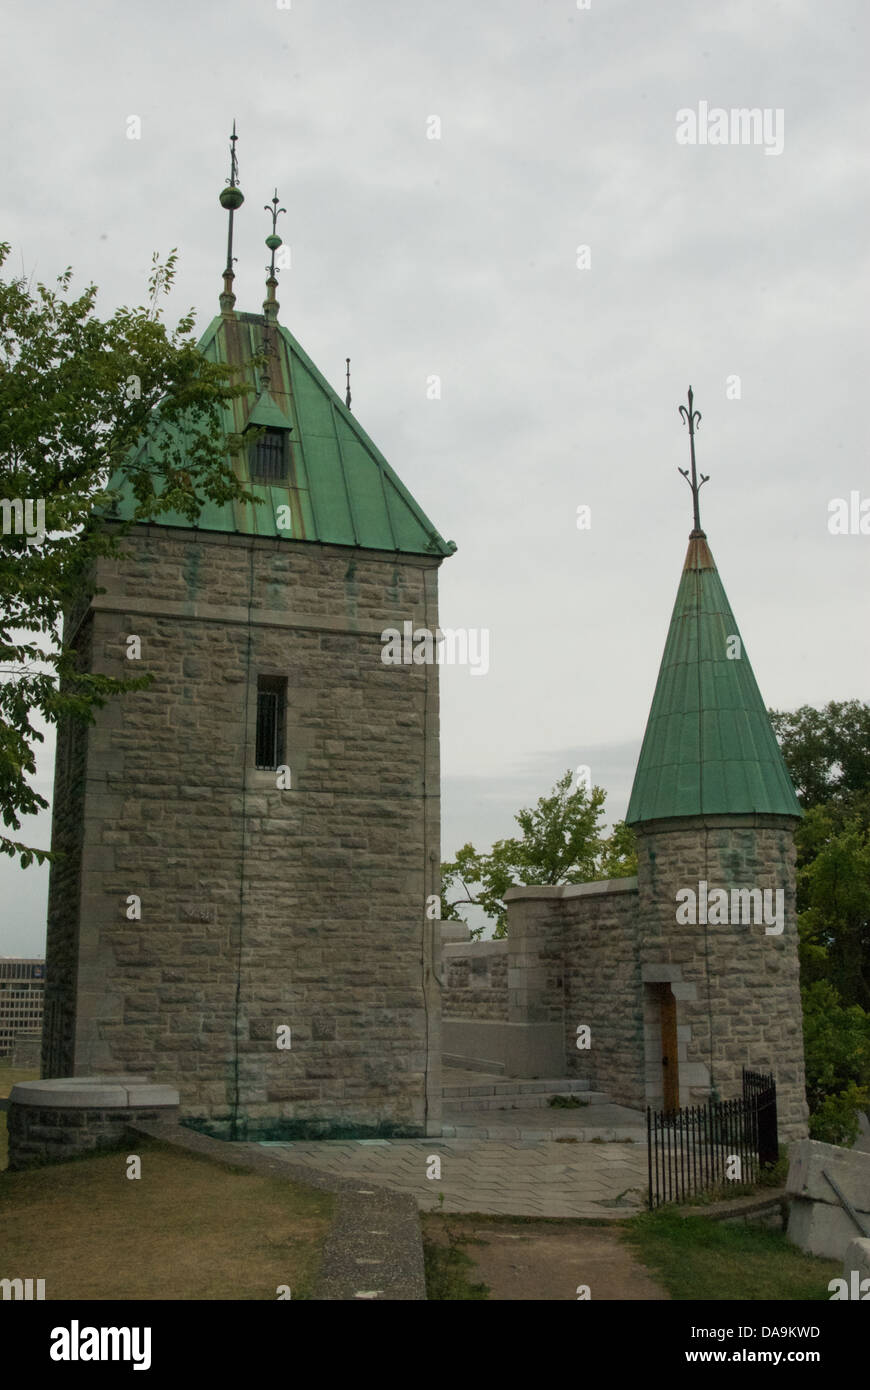 Citadelle von Quebec, Quebec City, Kanada. Stockfoto